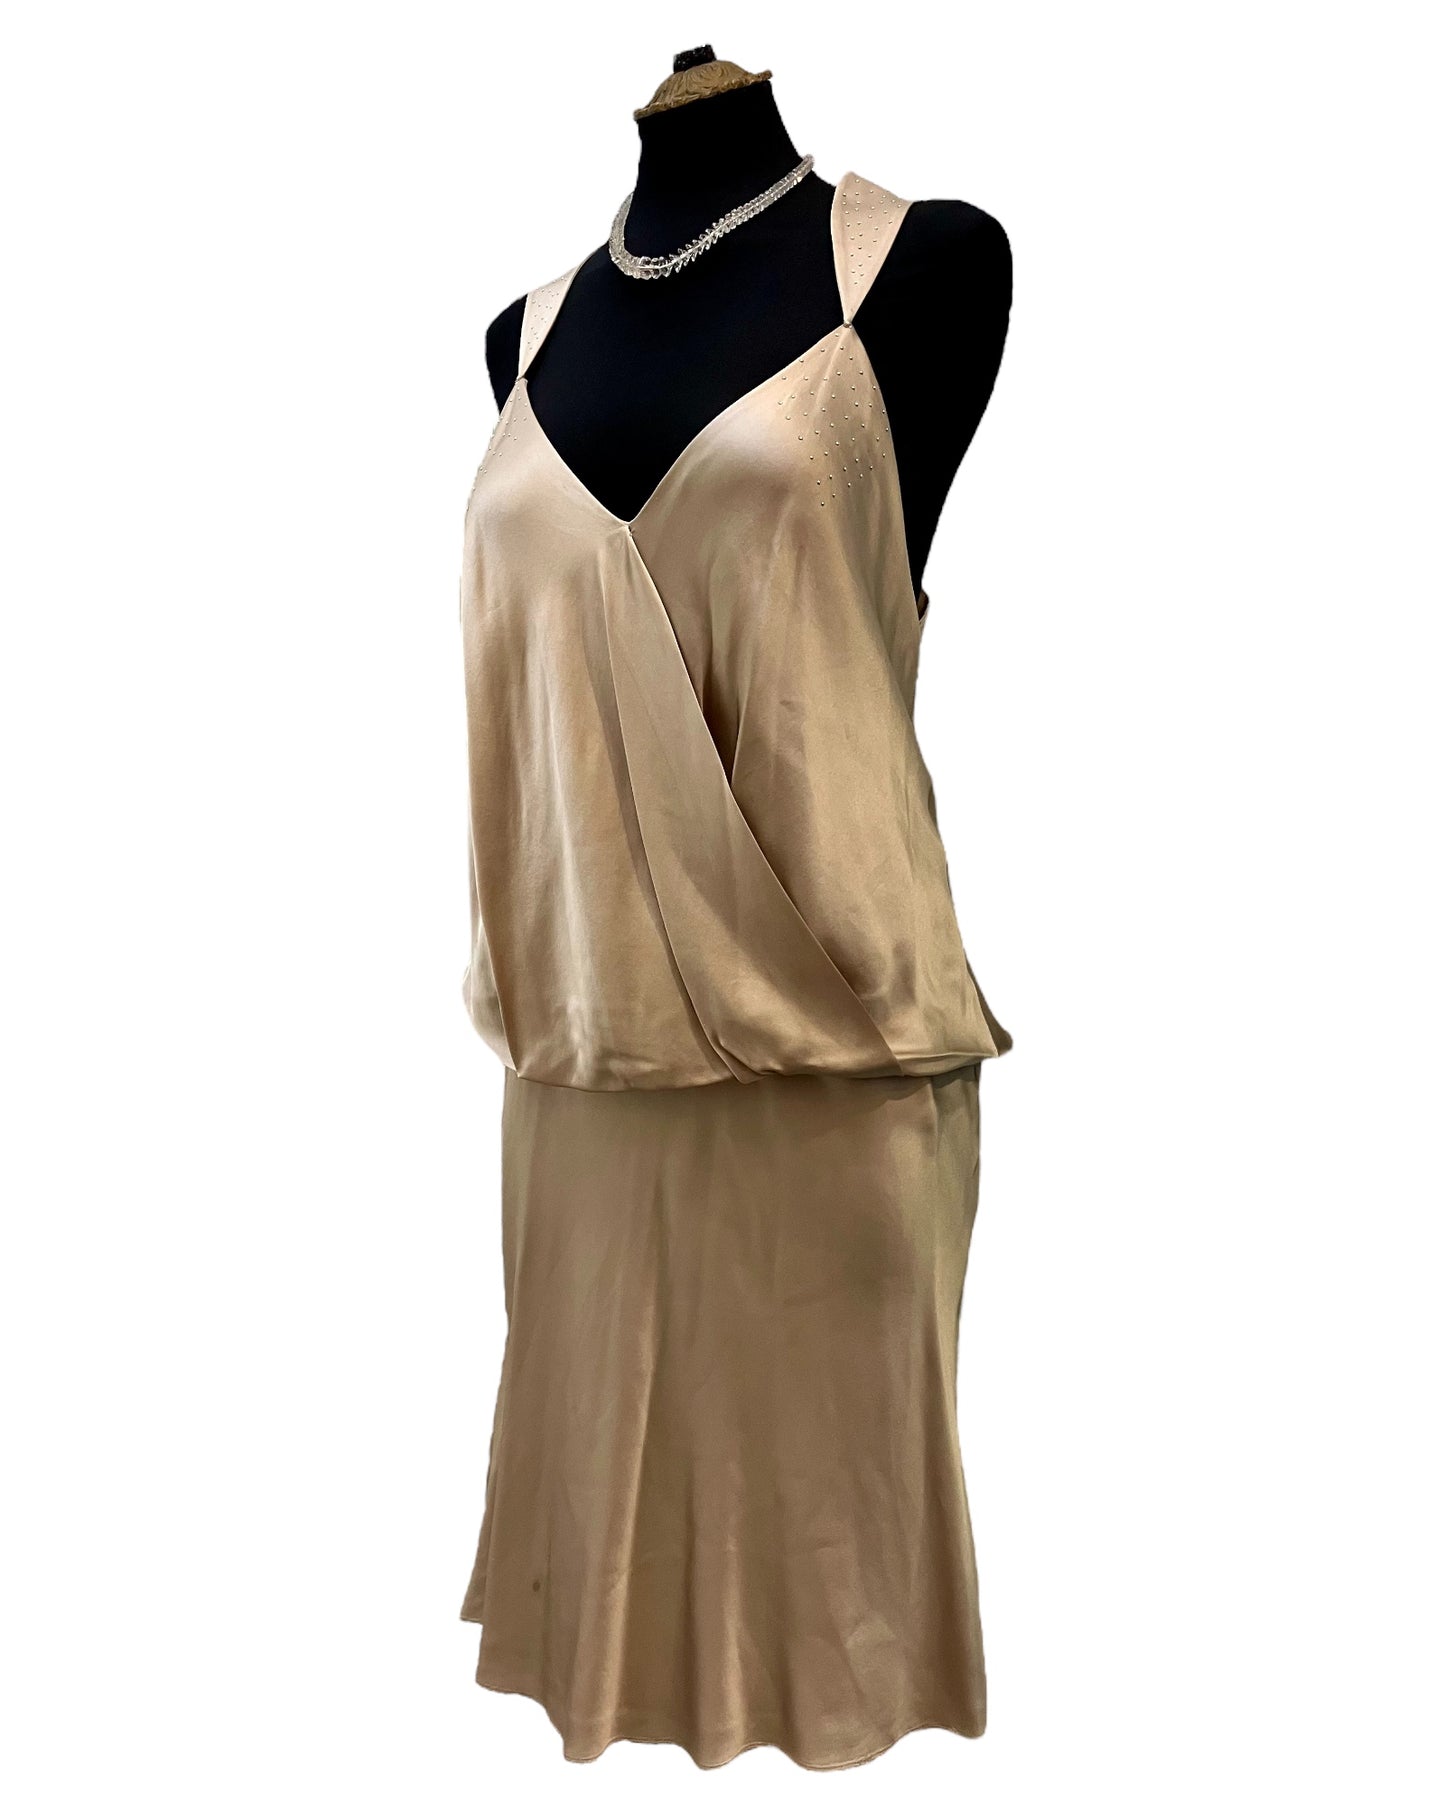 Designer BCBG MAZRIA RUNWAY Tan Silk Dress